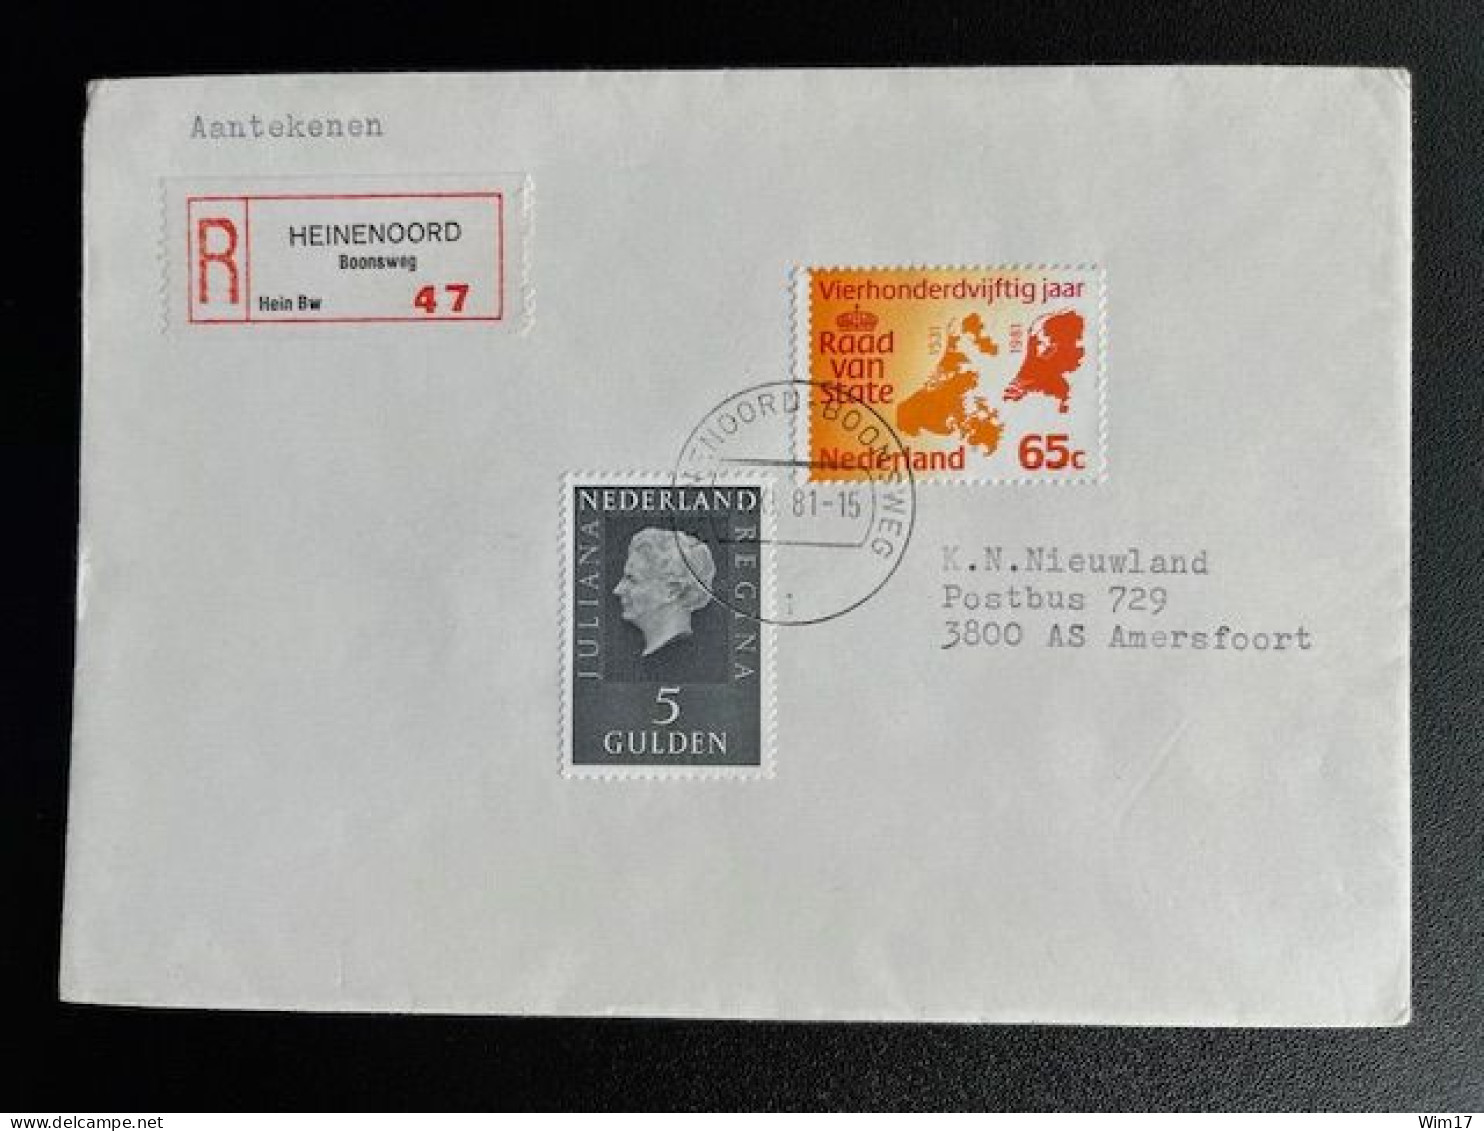 NETHERLANDS 1981 REGISTERED LETTER HEINENOORD BOONSWEG TO AMERSFOORT 19-11-1981 NEDERLAND AANGETEKEND - Briefe U. Dokumente